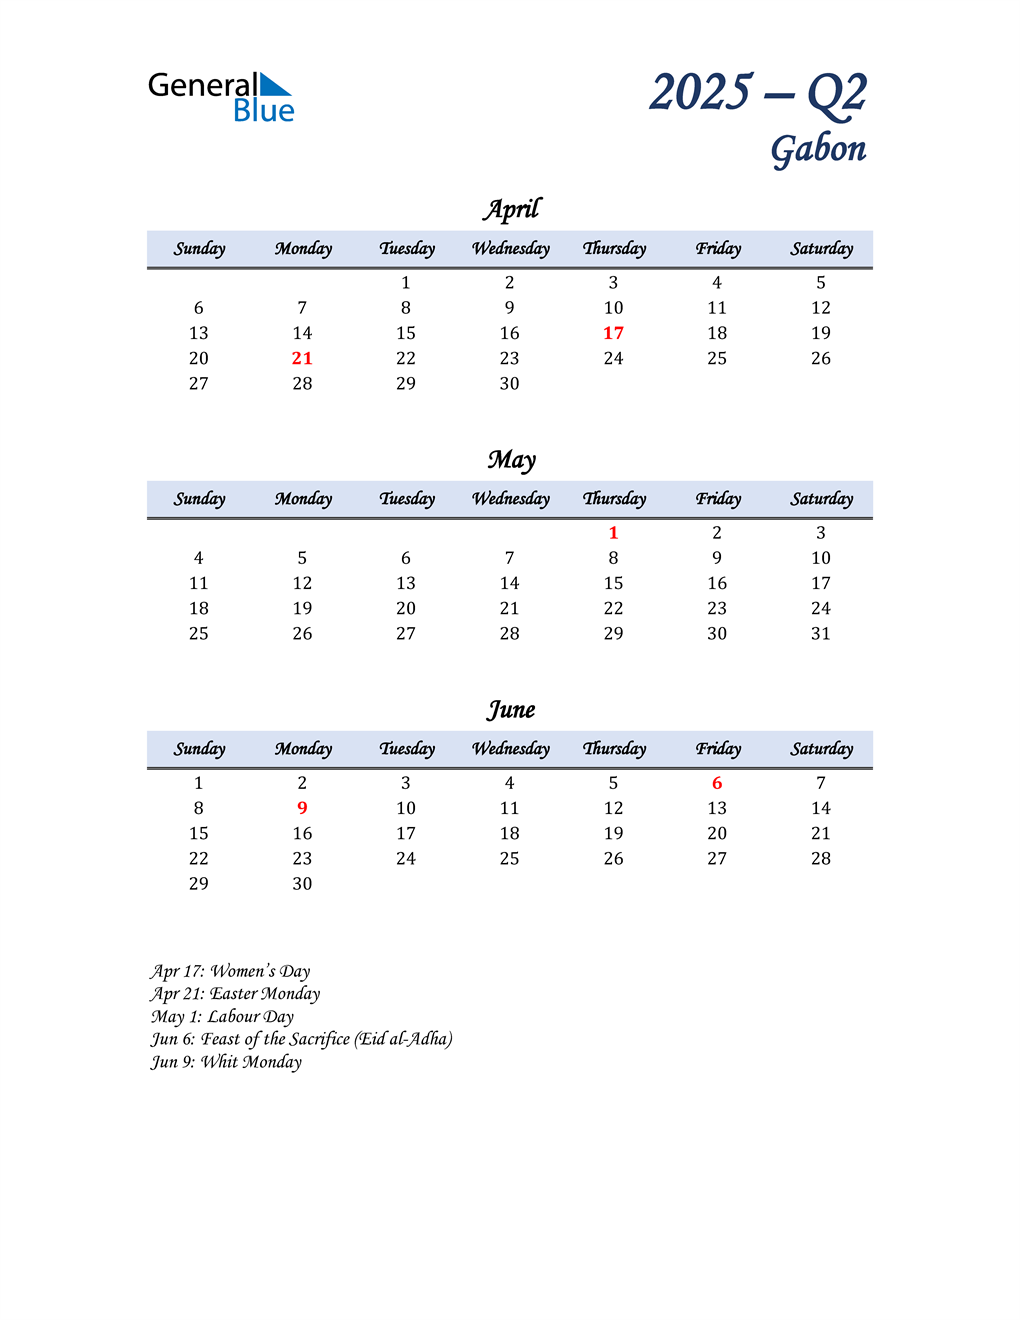  April, May, and June Calendar for Gabon